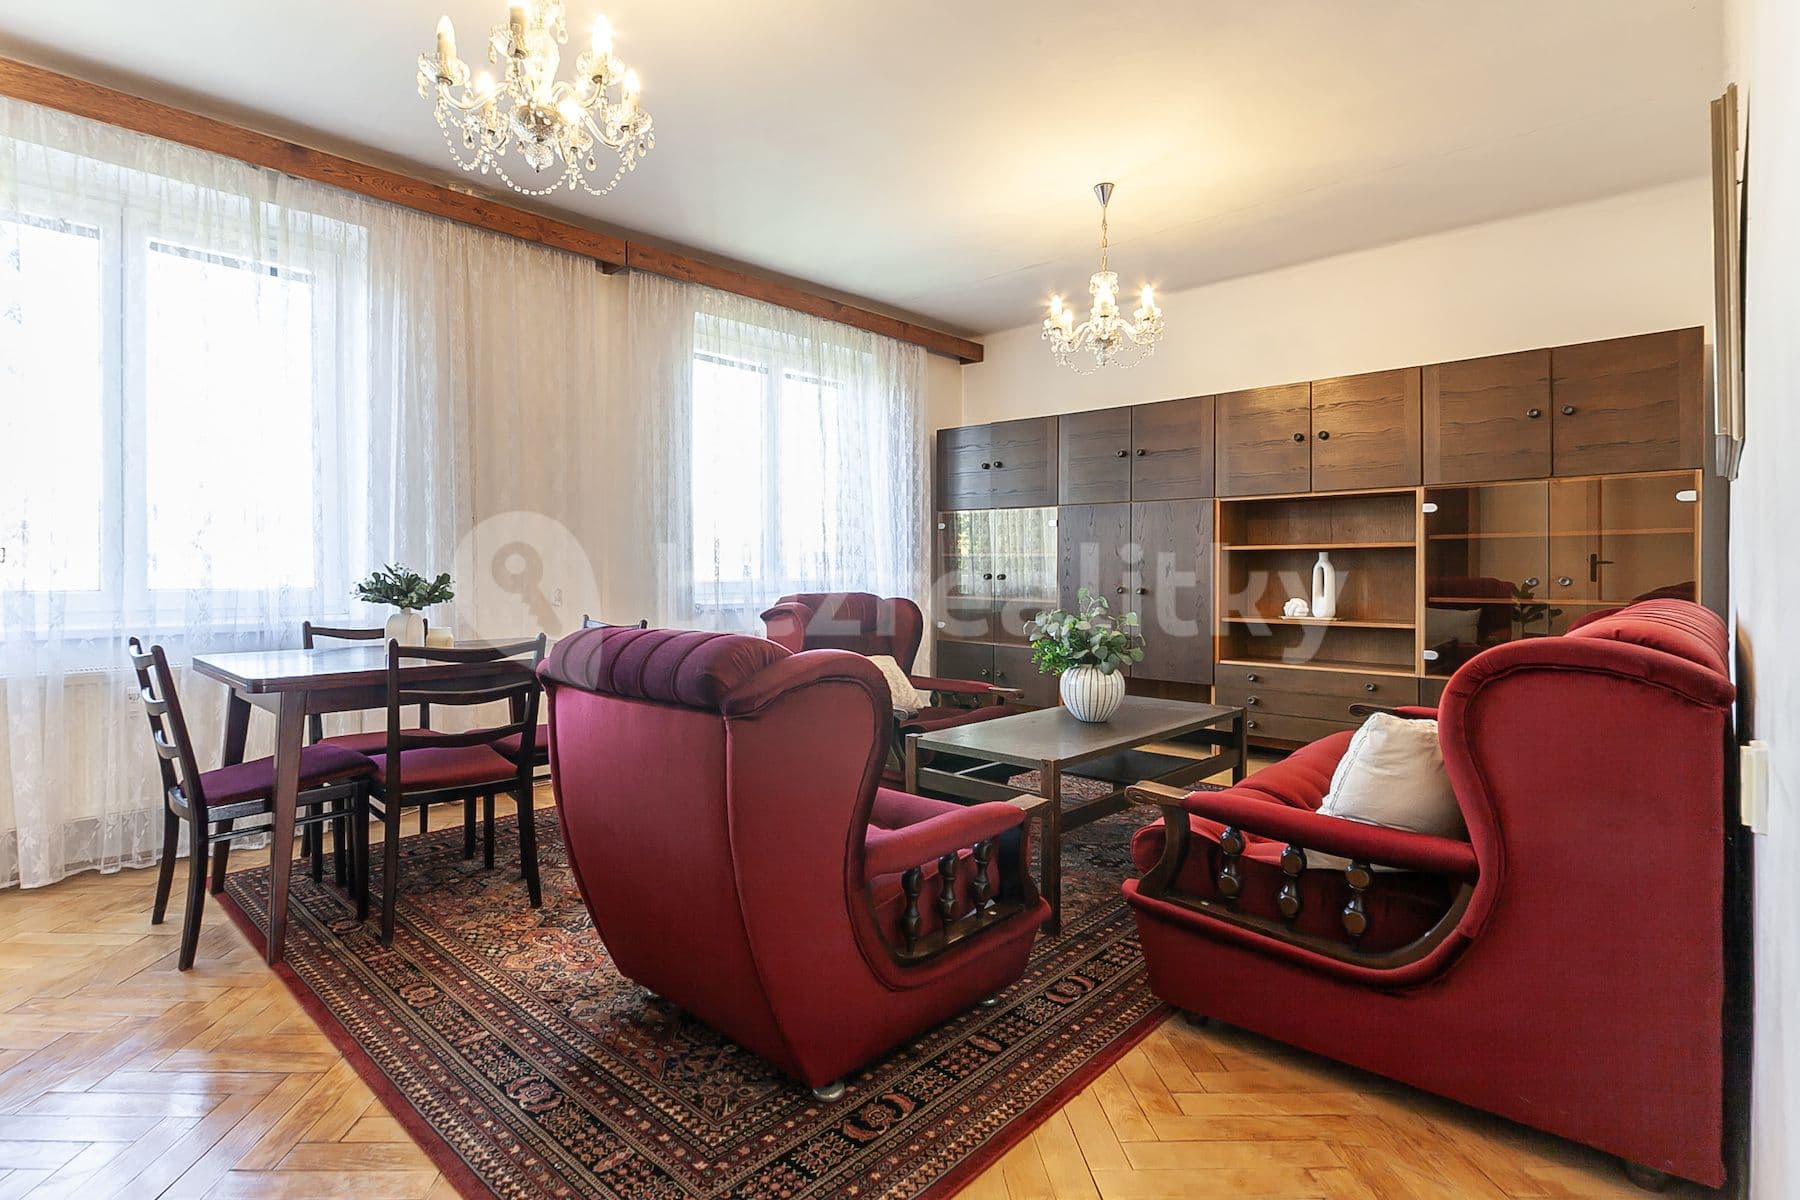 3 bedroom flat for sale, 86 m², Fráni Šrámka, Prague, Prague